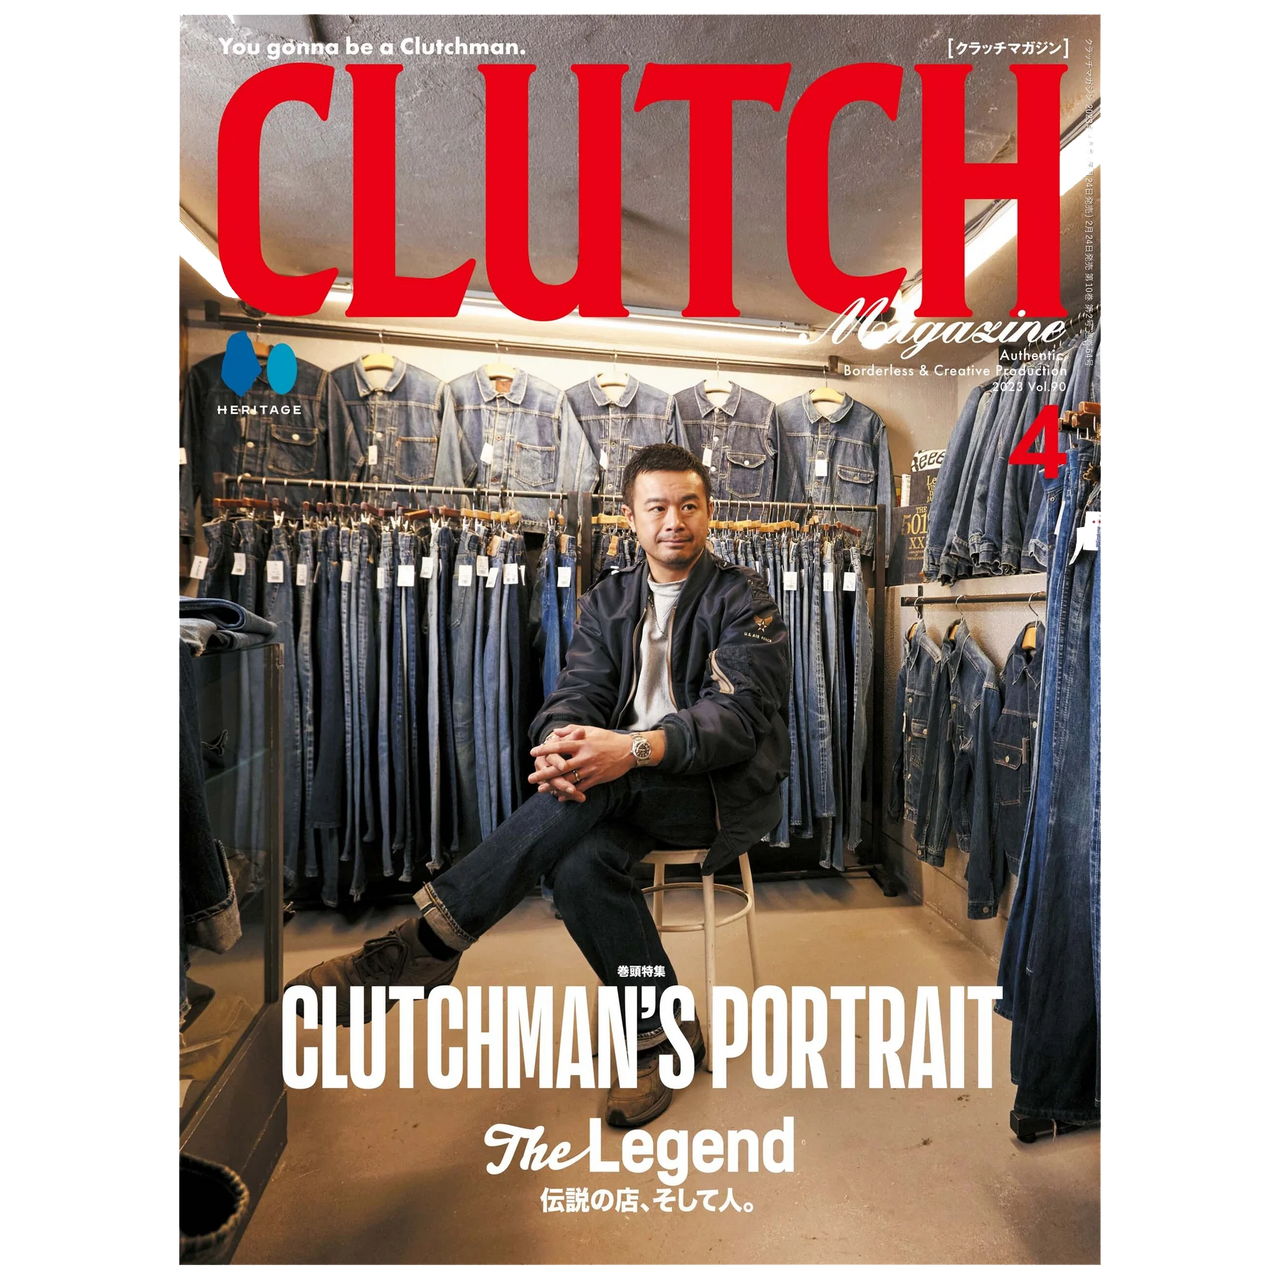 Clutch Magazine Vol. 90 "CLUTCH MANS PORTRAIT" The Legend-Magazine-Clutch Cafe